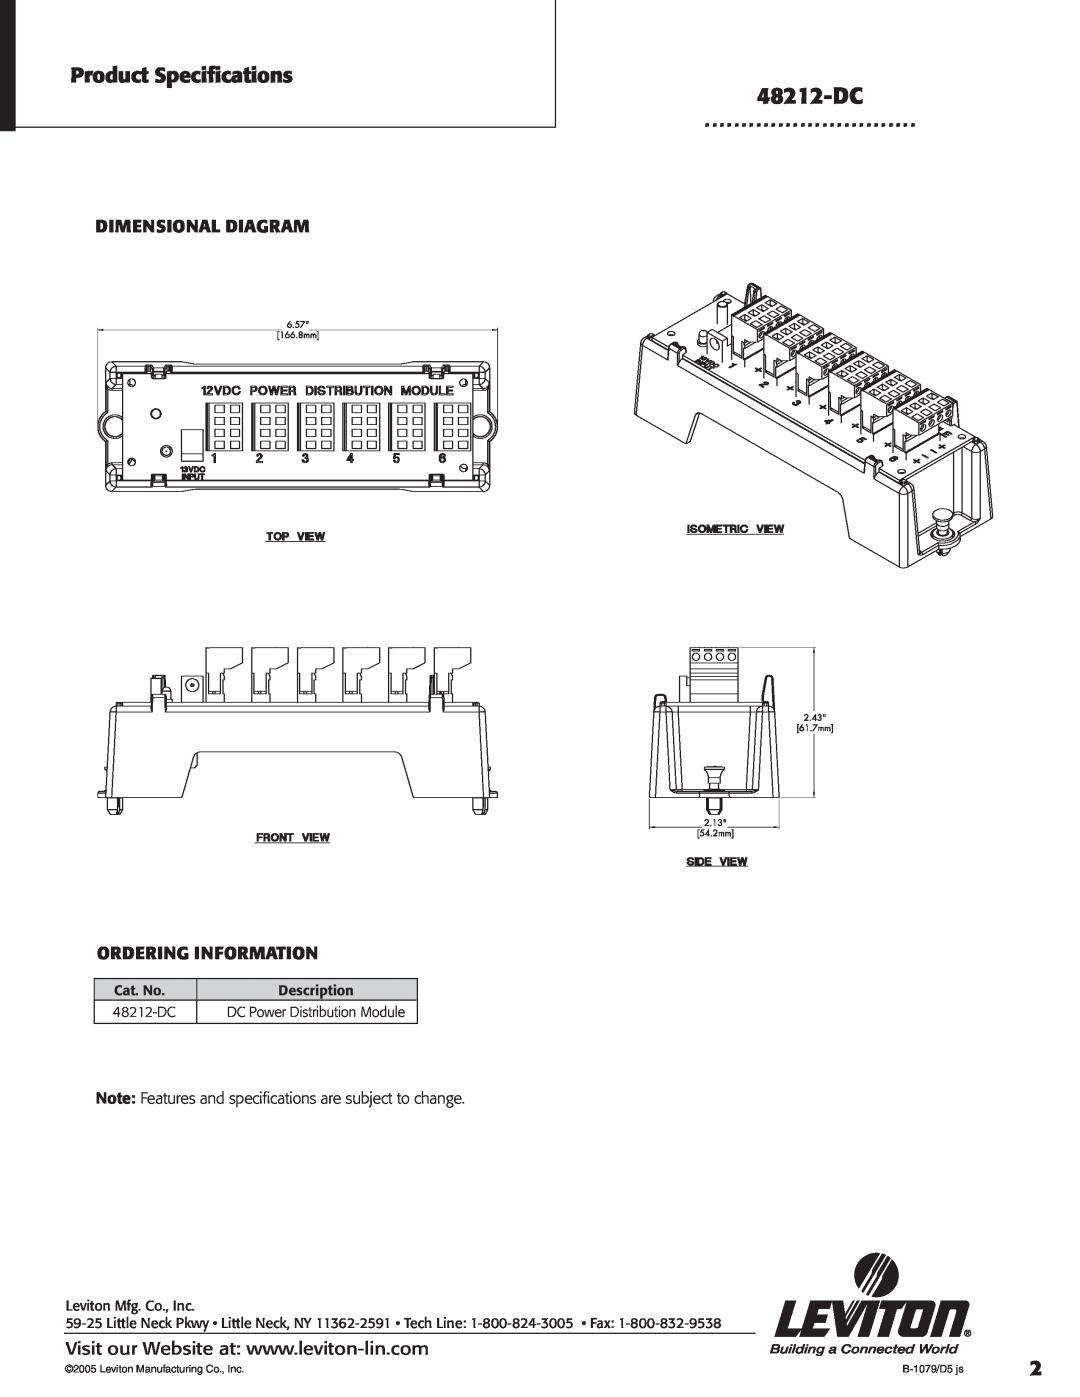 Leviton 48212-DC Dimensional Diagram Ordering Information, Product Specifications, Cat. No, Description, B-1079/D5 js 